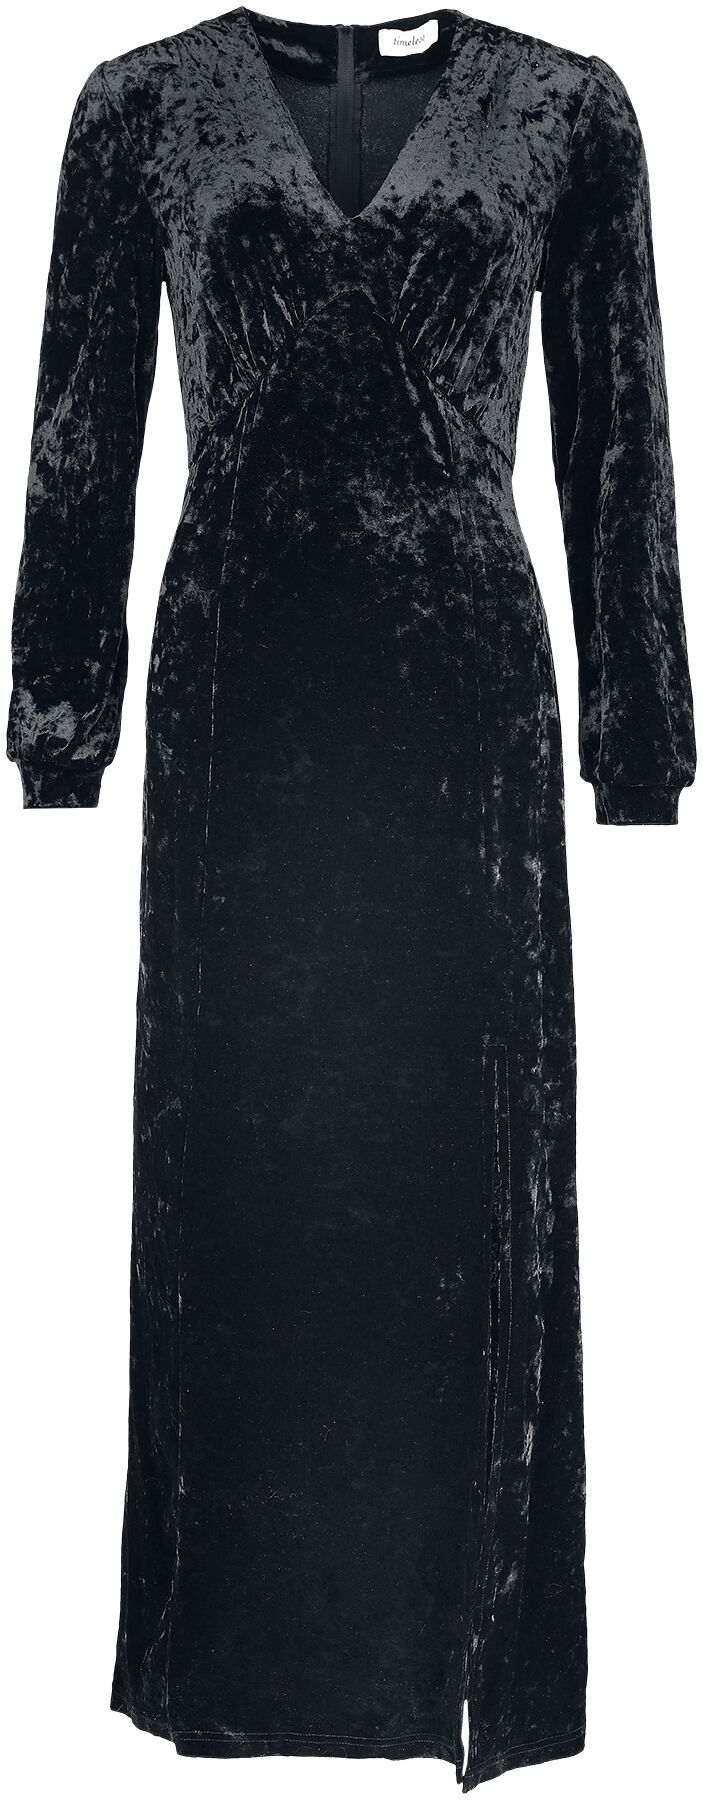 Timeless London - Miley Black Dress - Kleid lang - schwarz